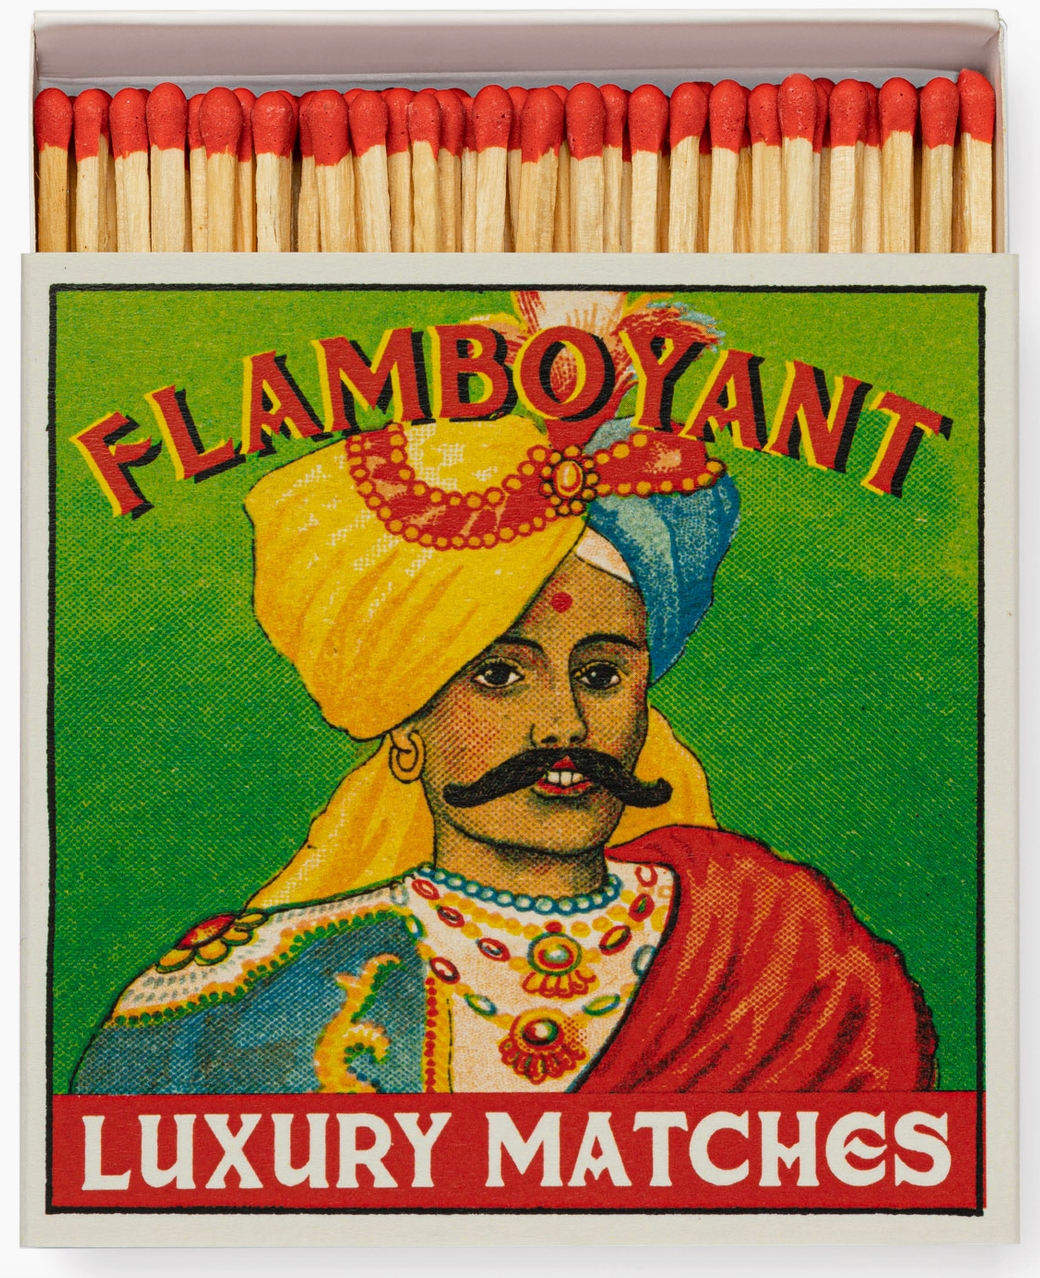 Archivist Matches - Mr Flamboyant